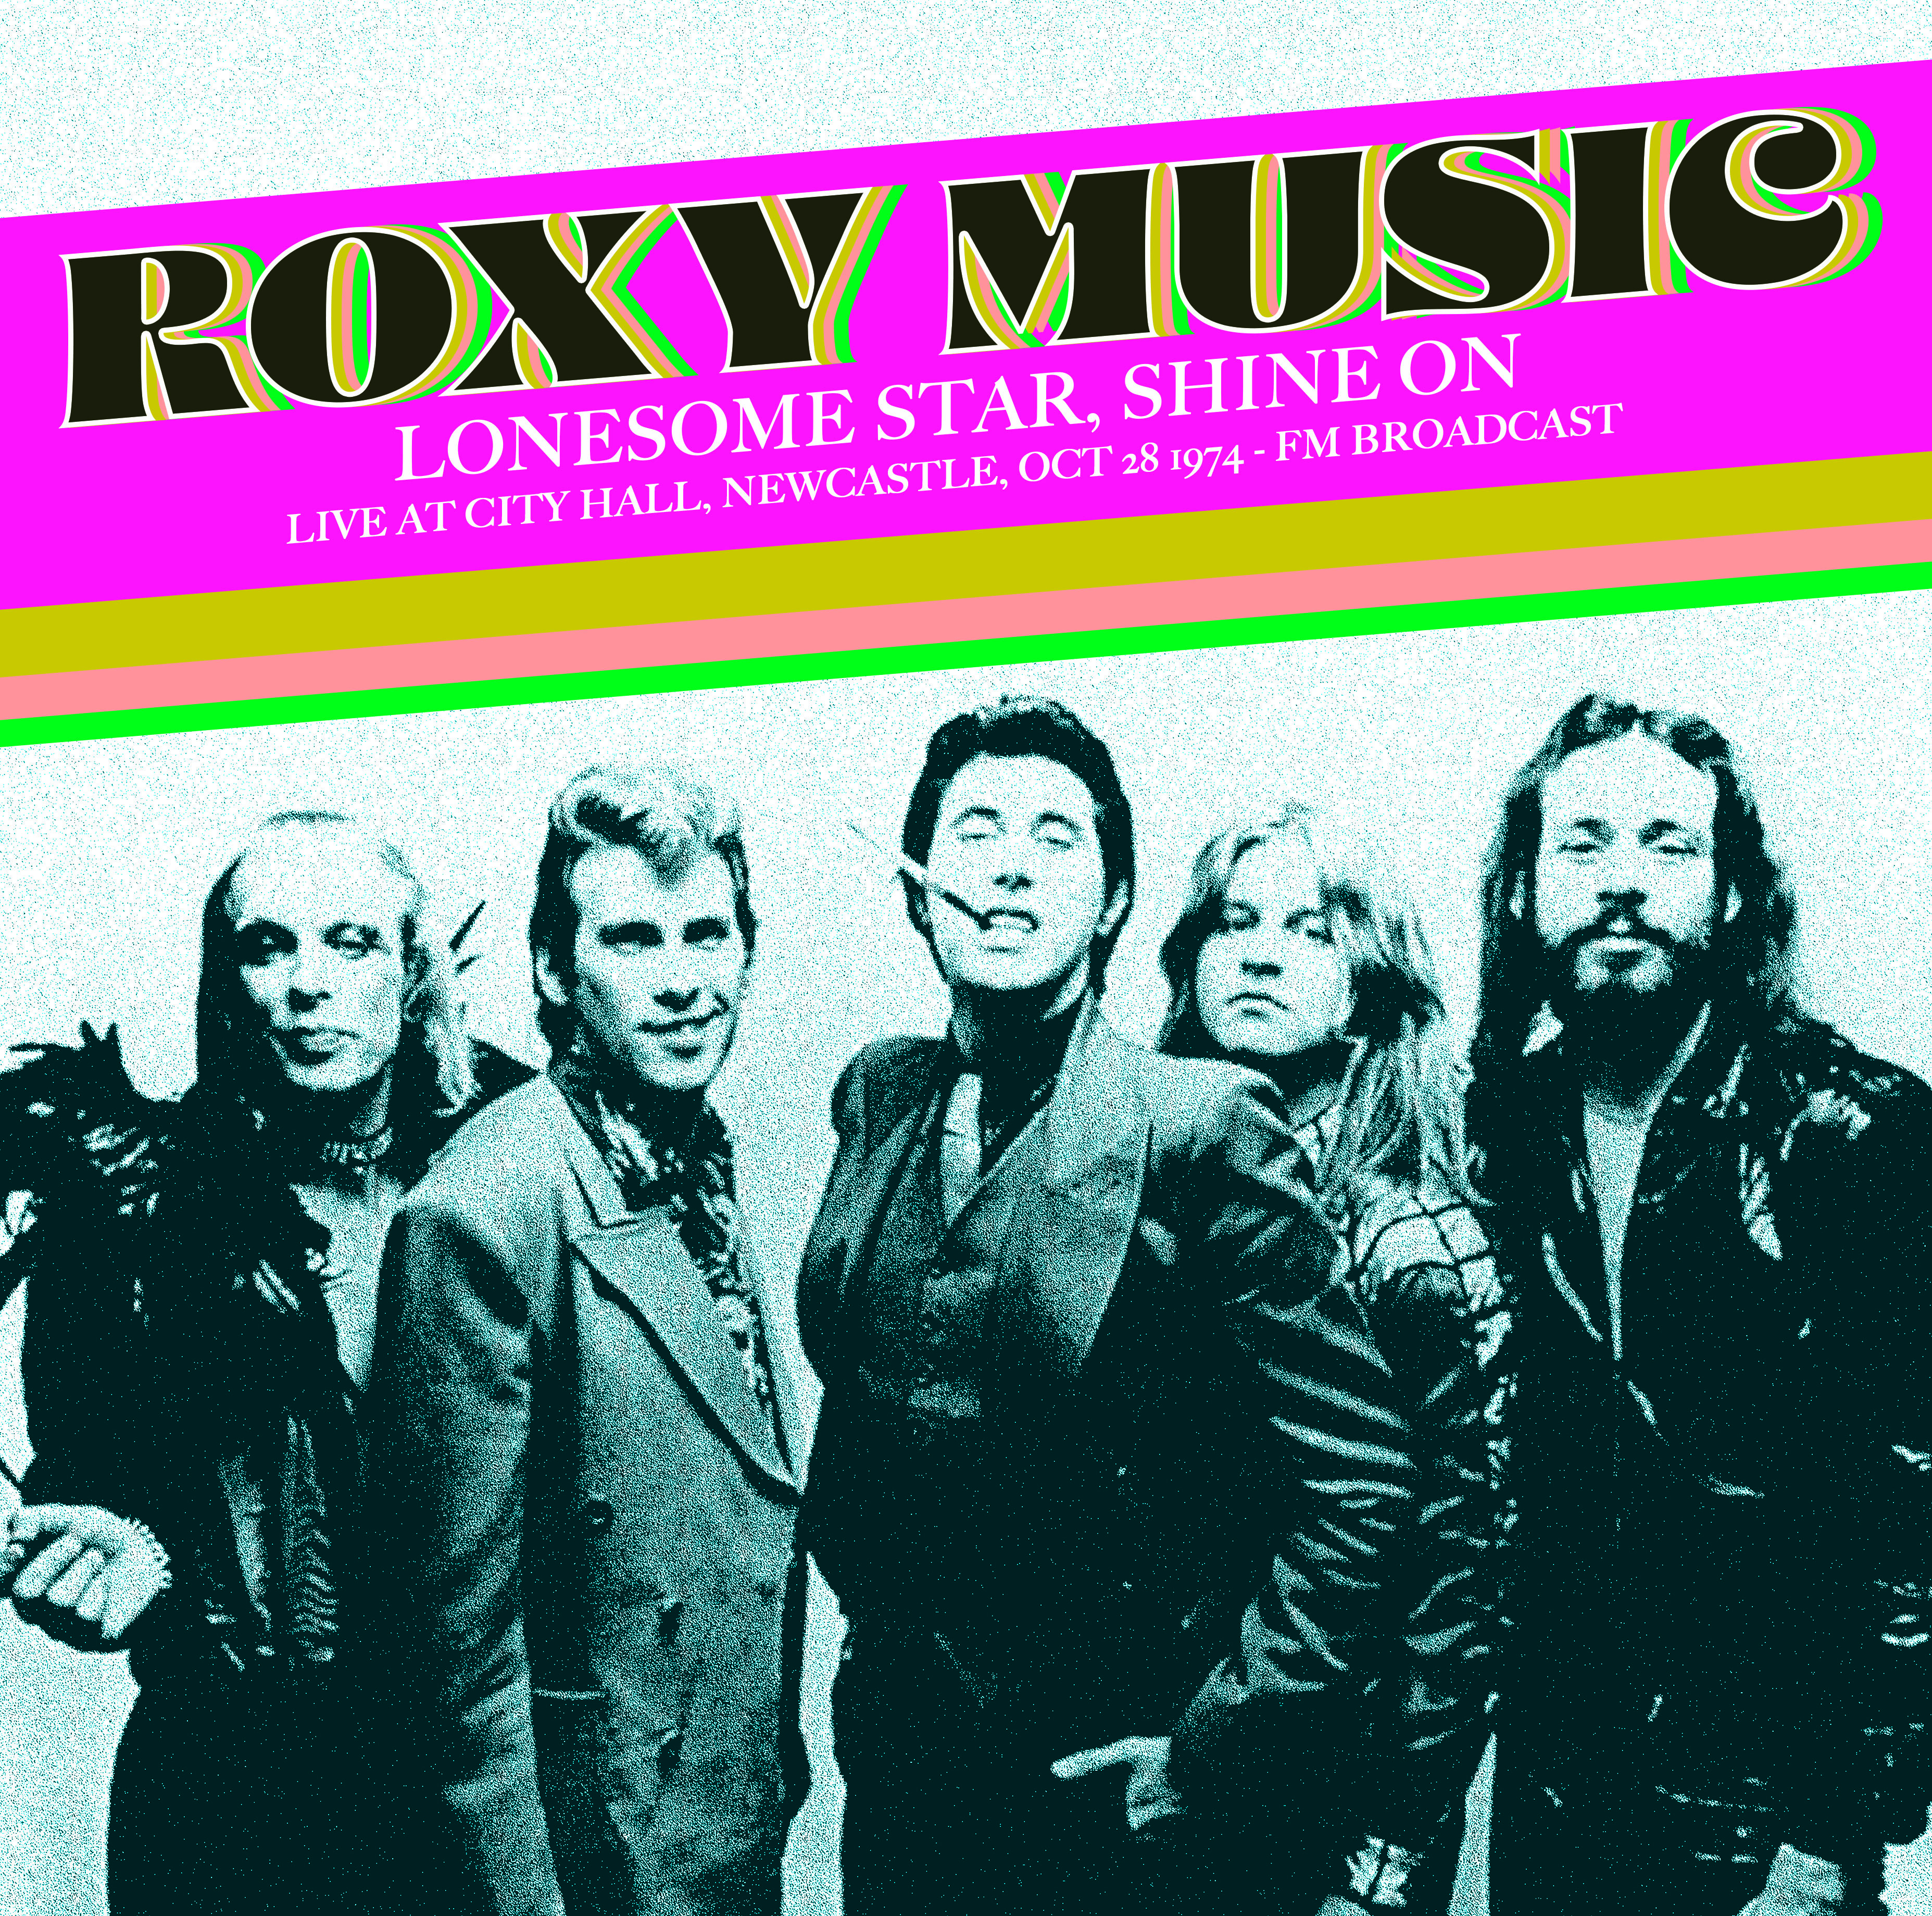 Roxy Music Lonesome Star, Shine On: Live at City Hall, Newcastle, Oct 28 (Vinyl) - Photo 1/1